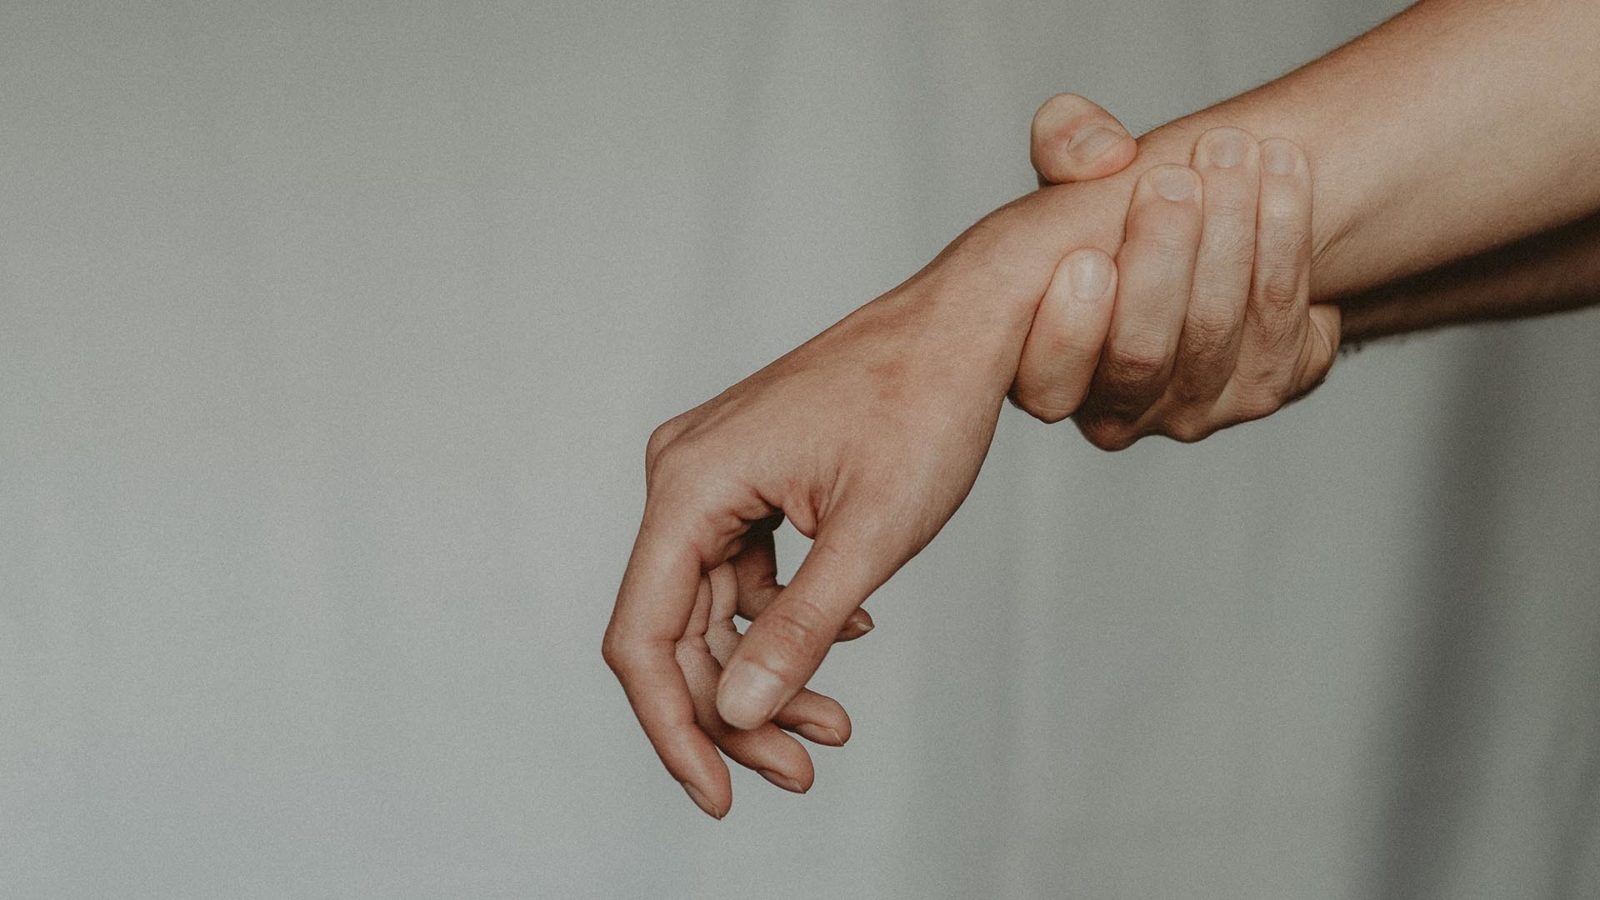 person grabbing their partner's wrist